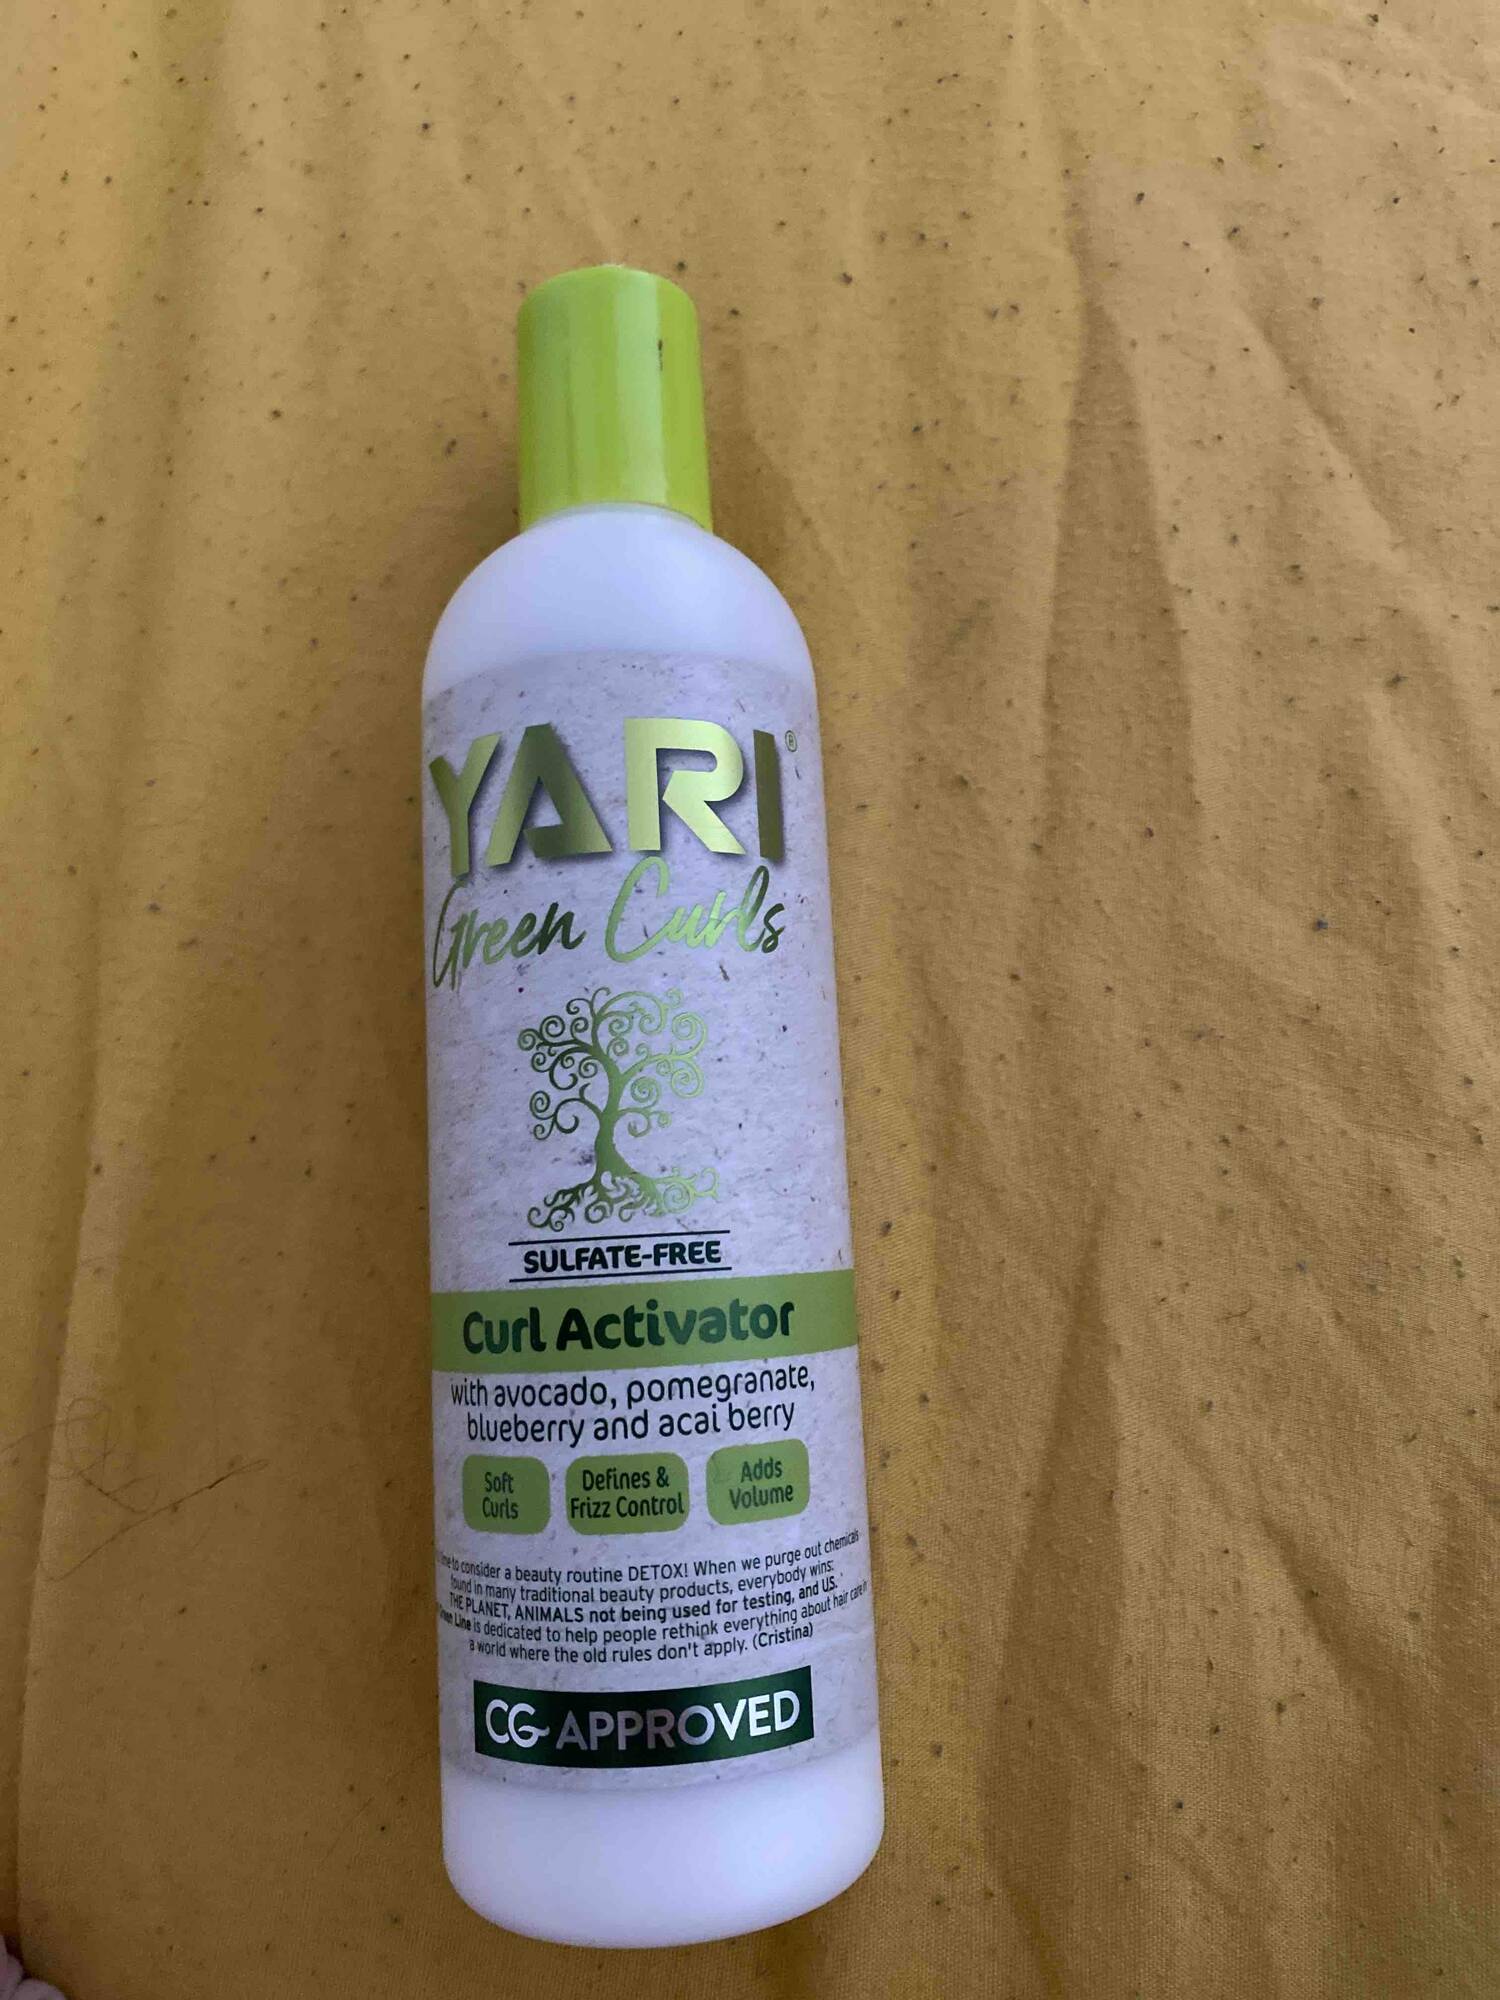 YARI - Green curls - Curl activator